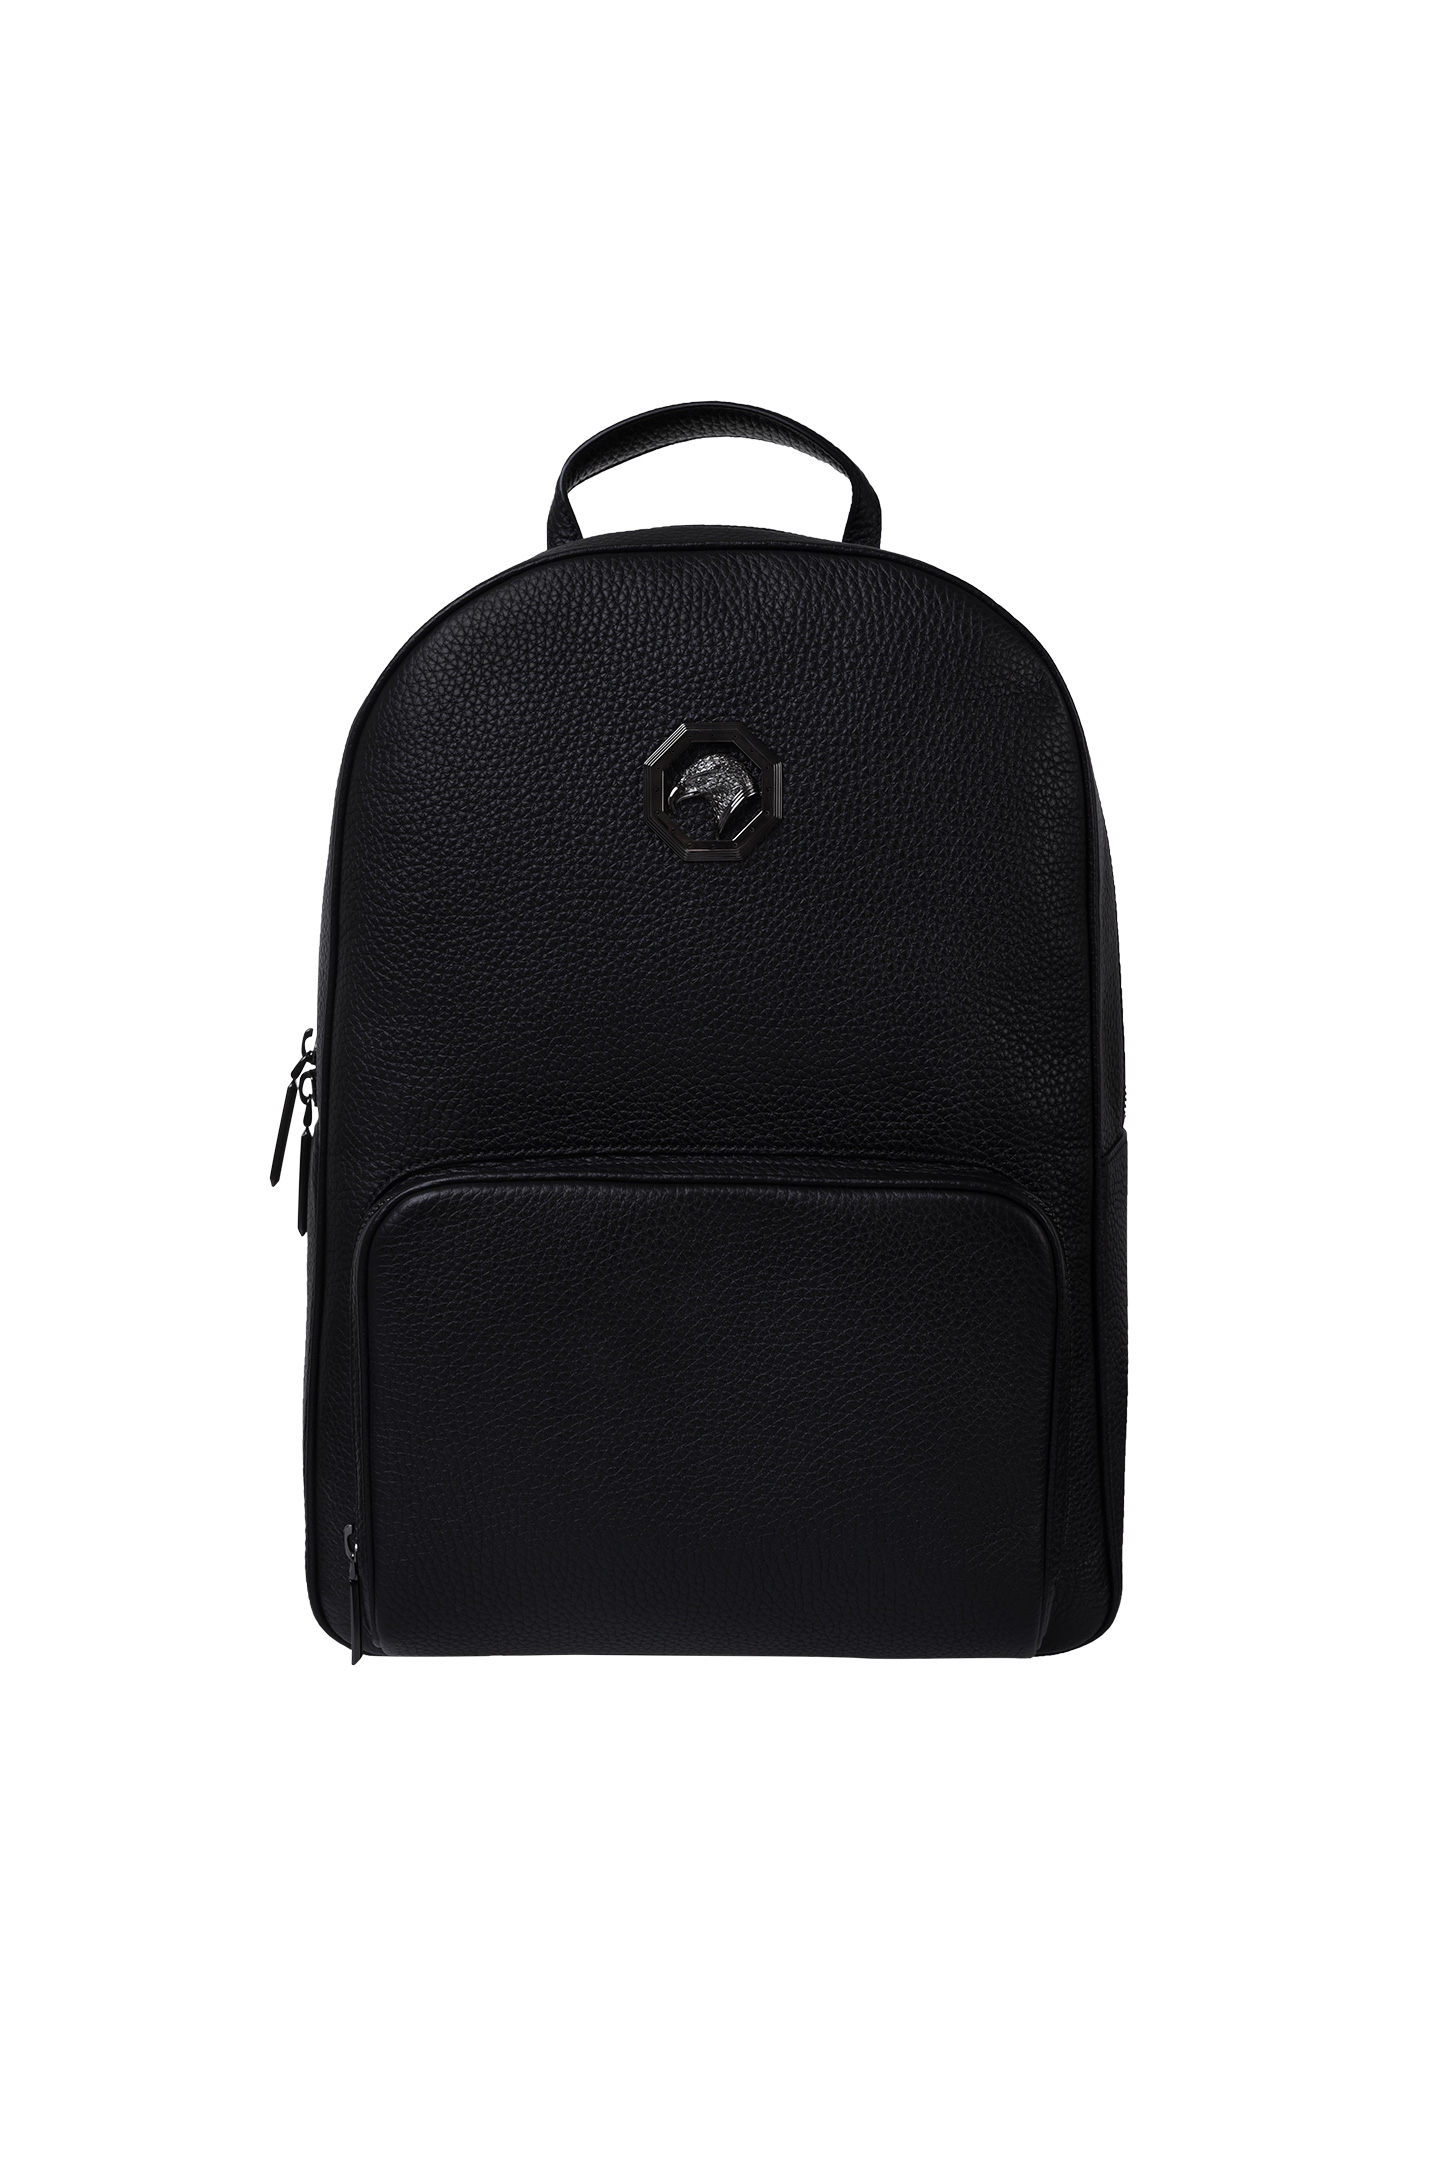 Рюкзак STEFANO RICCI ND150U VD, цвет: Черный, Мужской